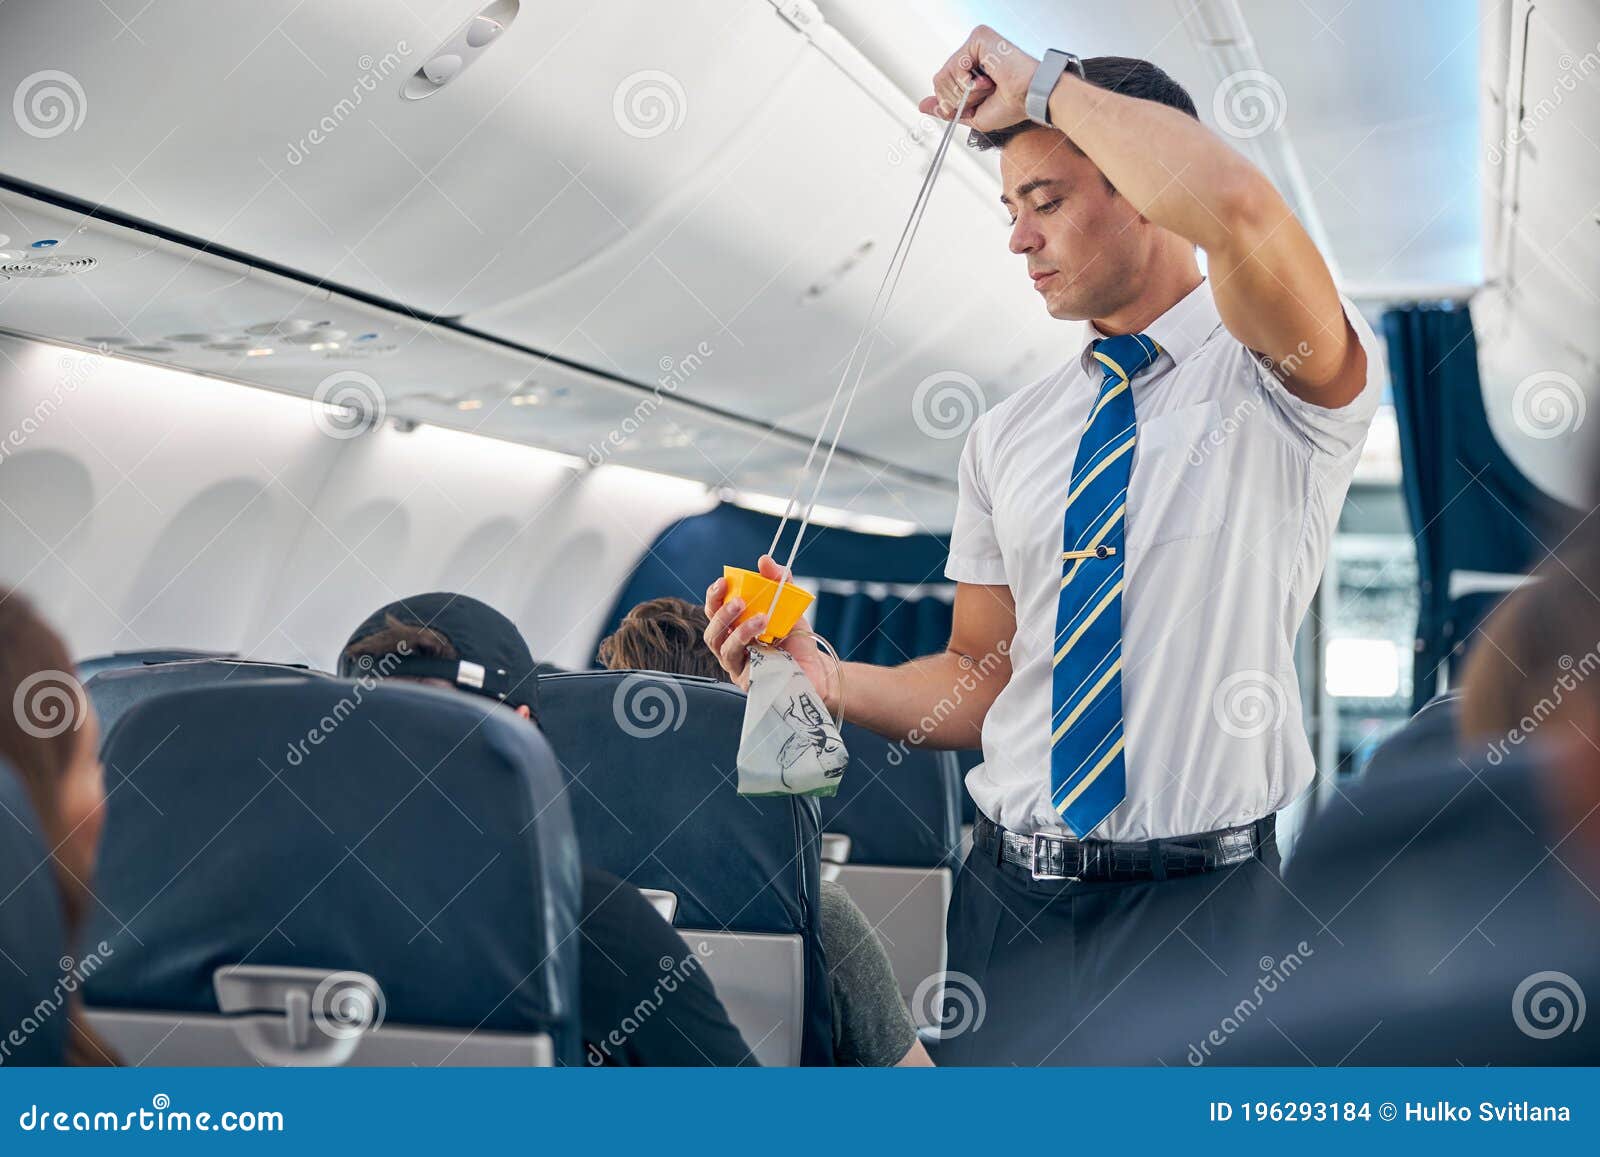 Be Safe safety information brochure in seat pocket on plane Stock Photo -  Alamy